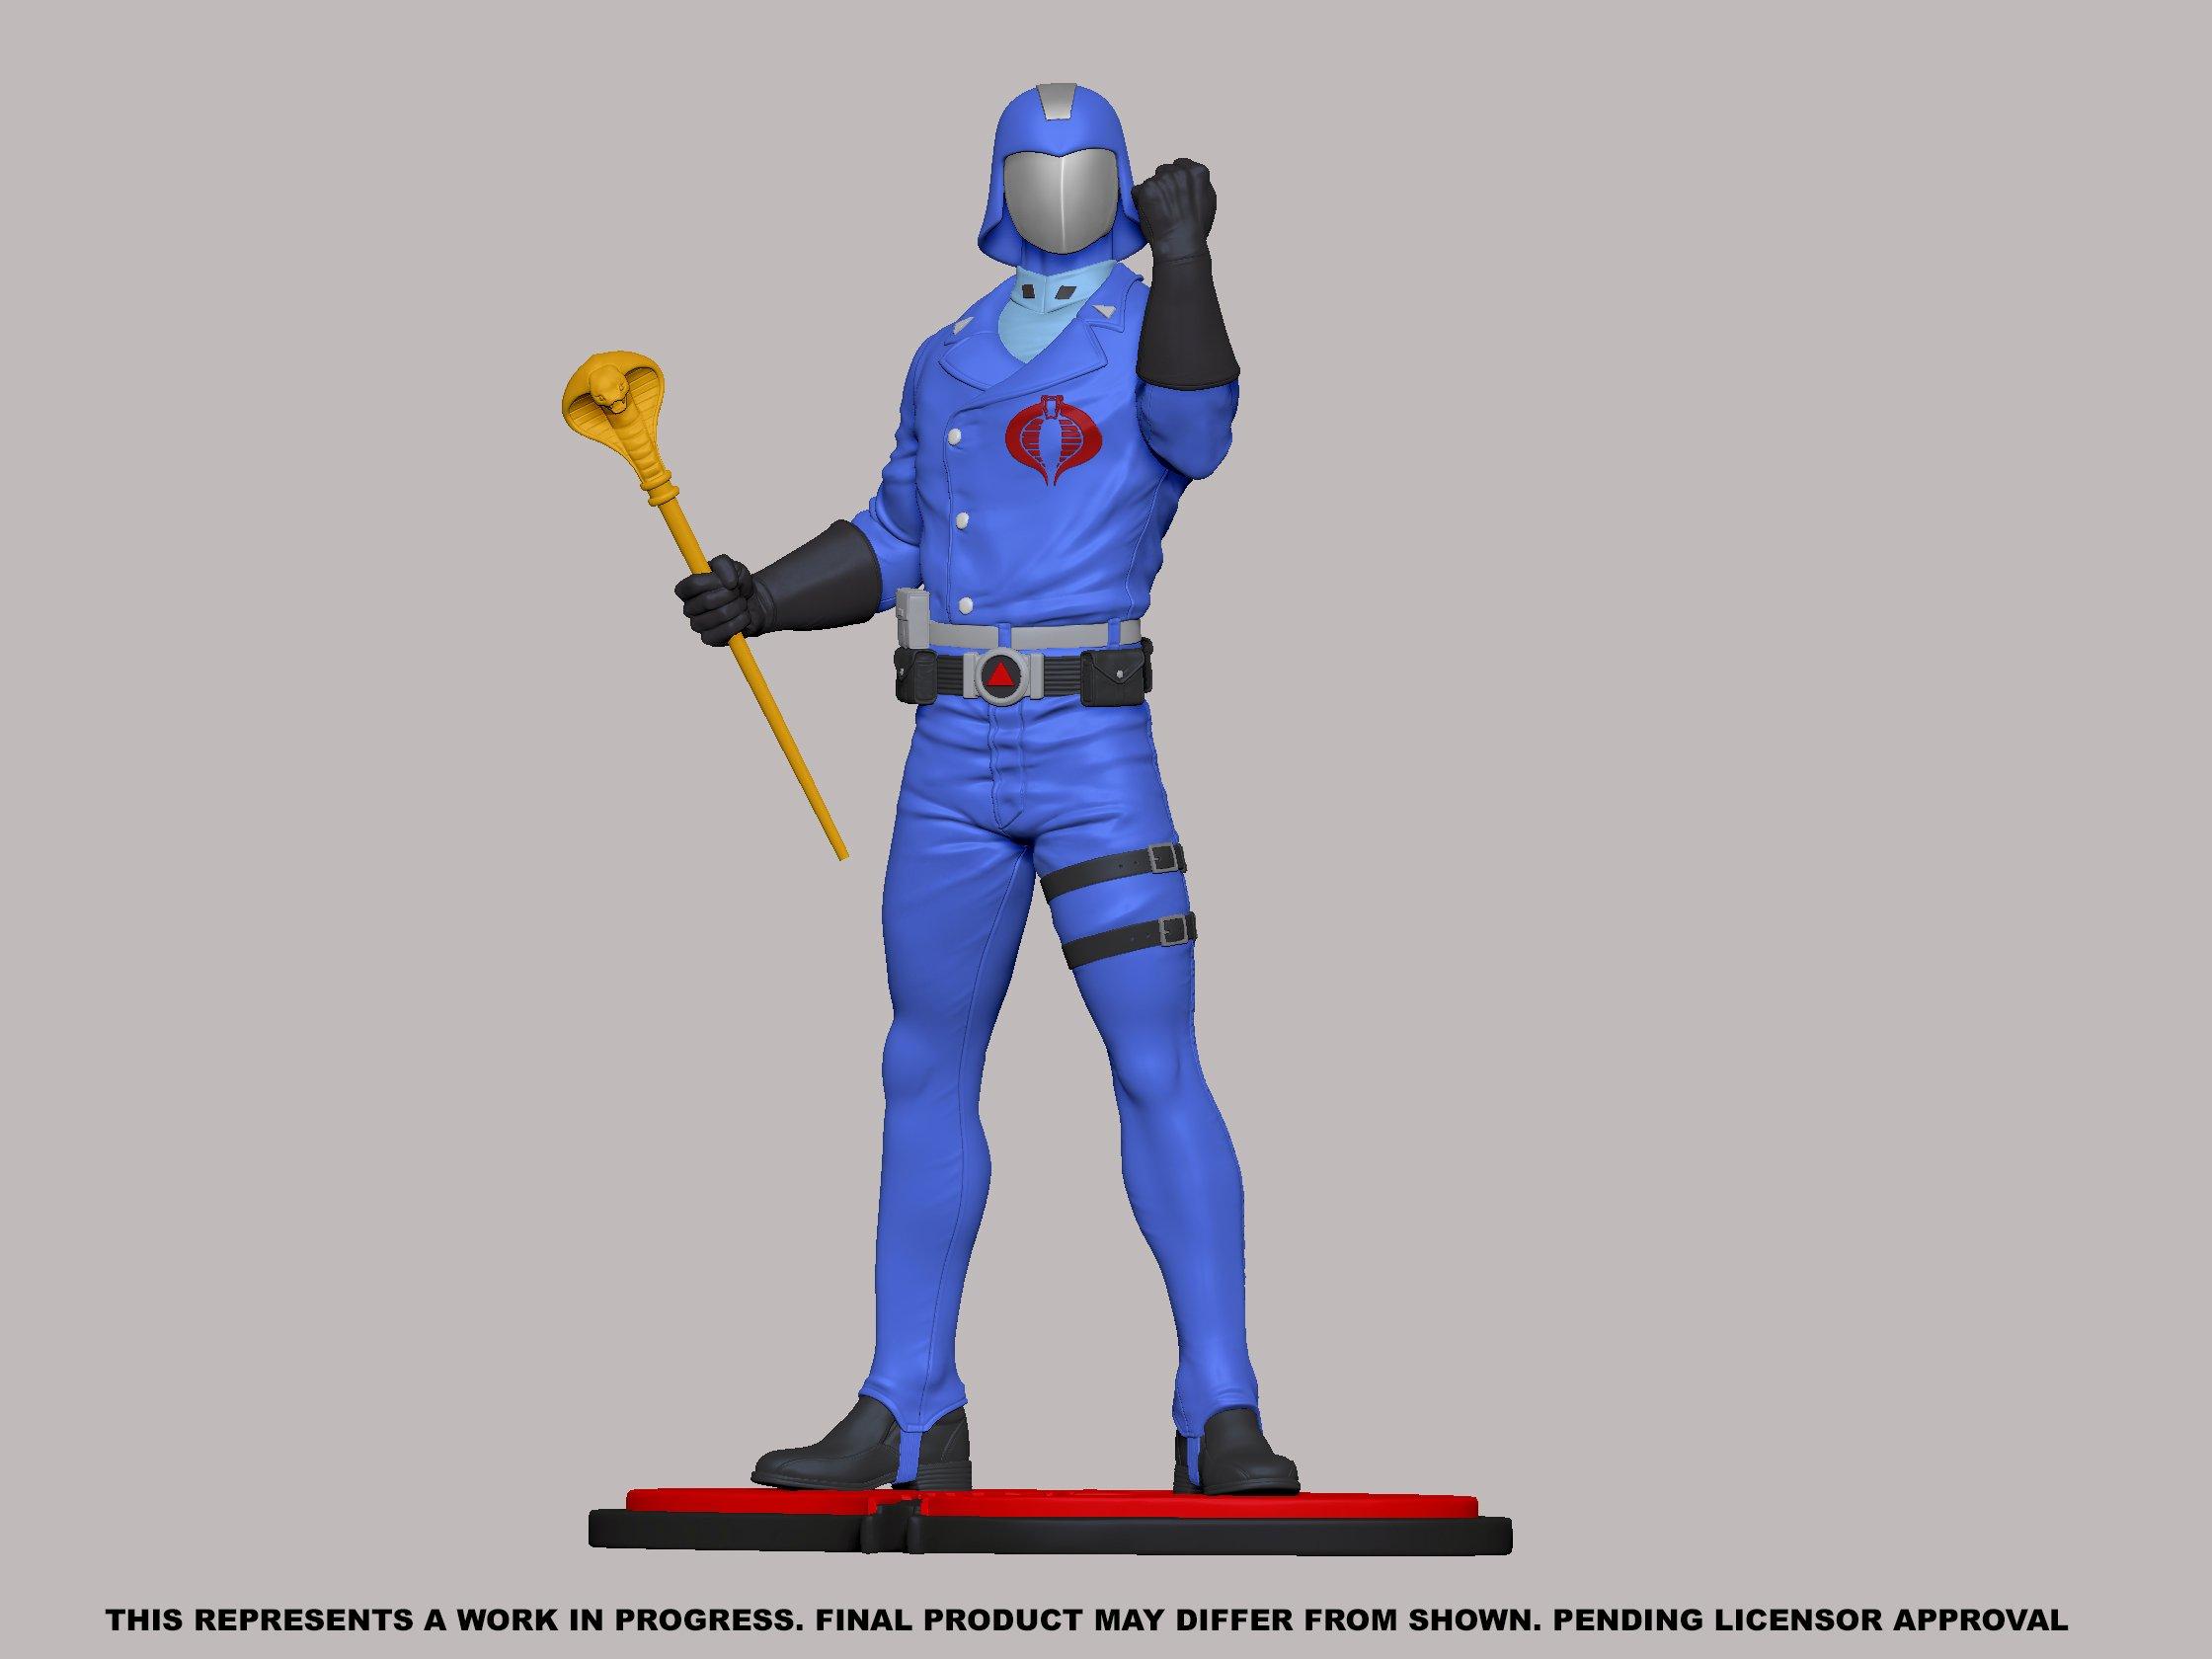 G.I. Joe Cobra Commander Statue